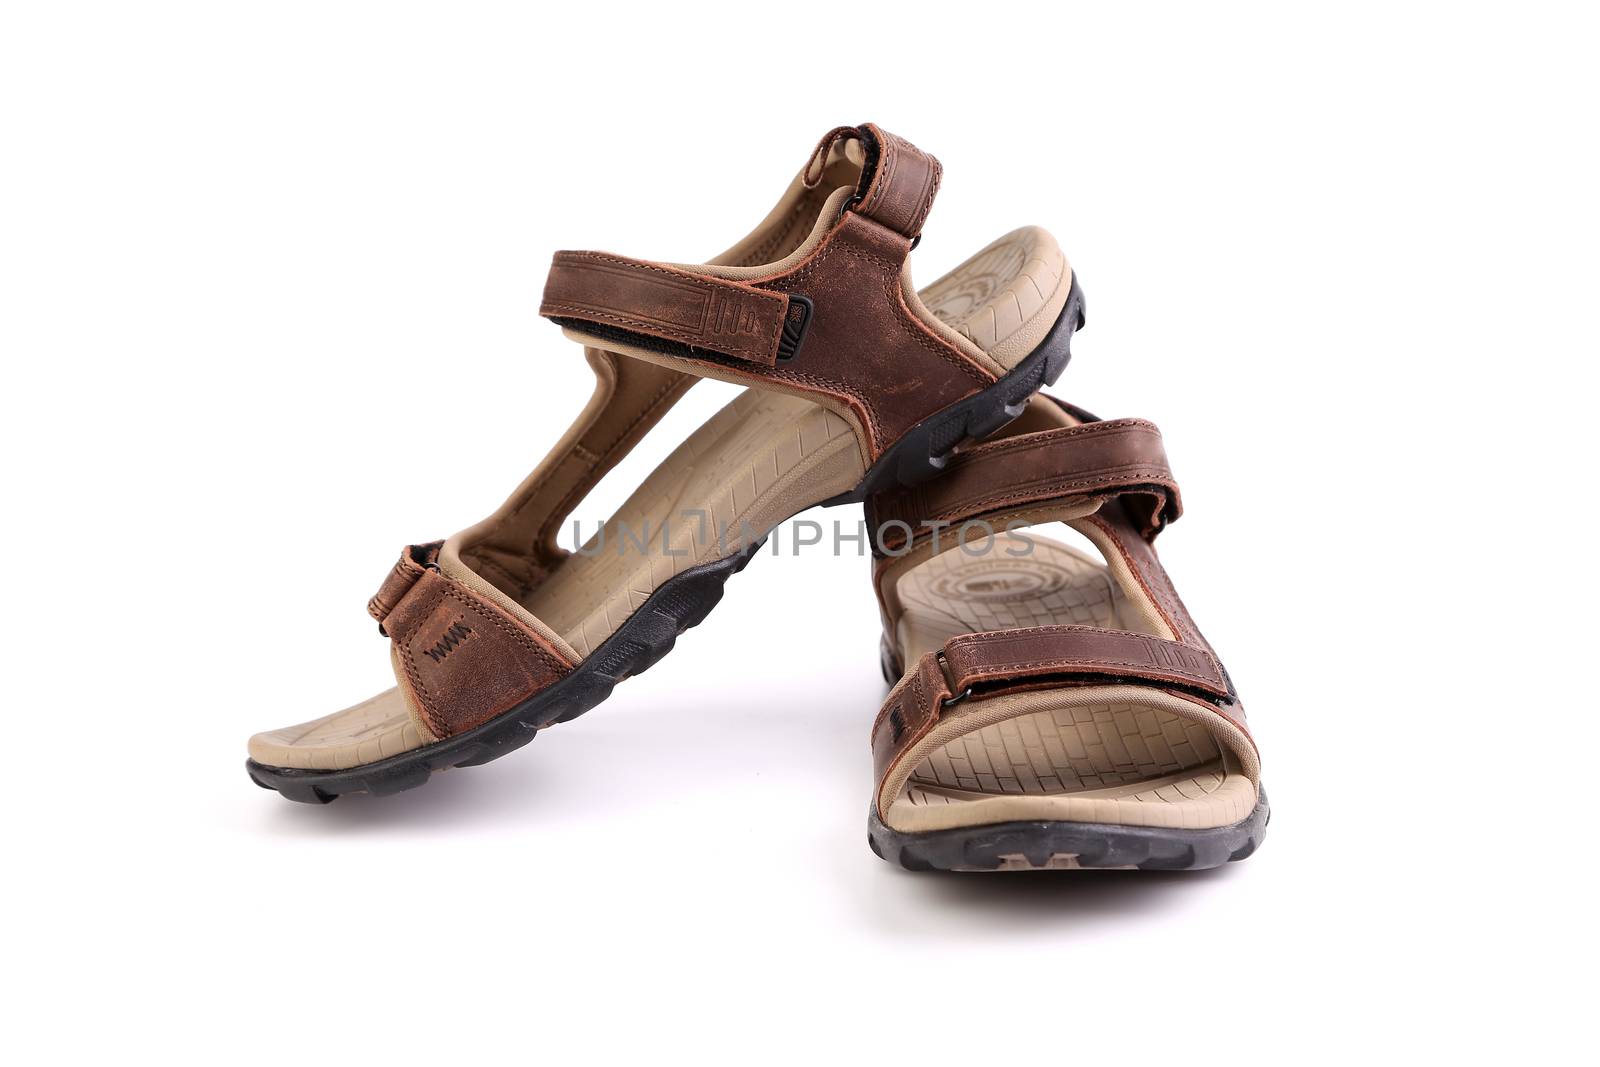 Sport brown sandals by indigolotos